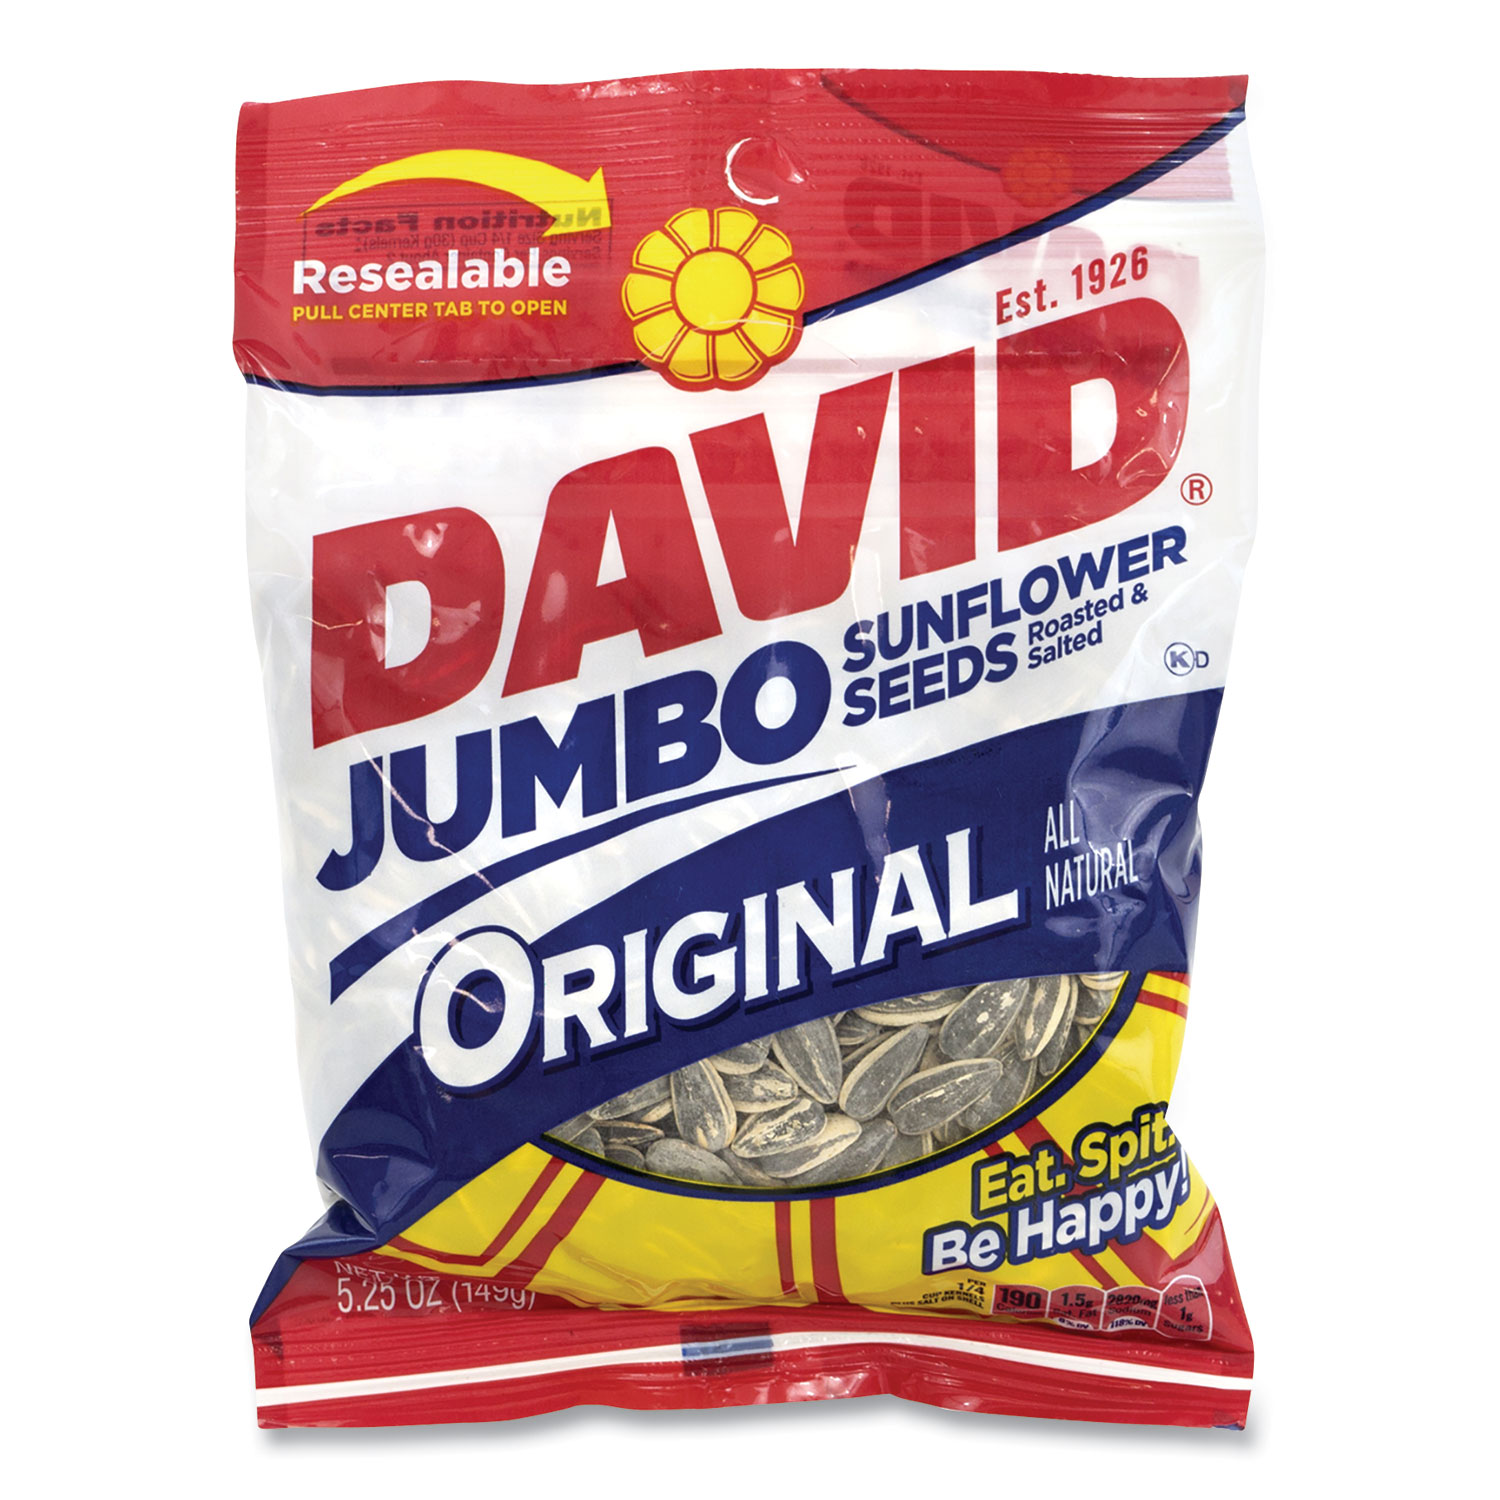  DAVID 23892 Jumbo Seeds Original, 5.25 oz Resealable Bag, 12/Carton, Free Delivery in 1-4 Business Days (GRR20900635) 